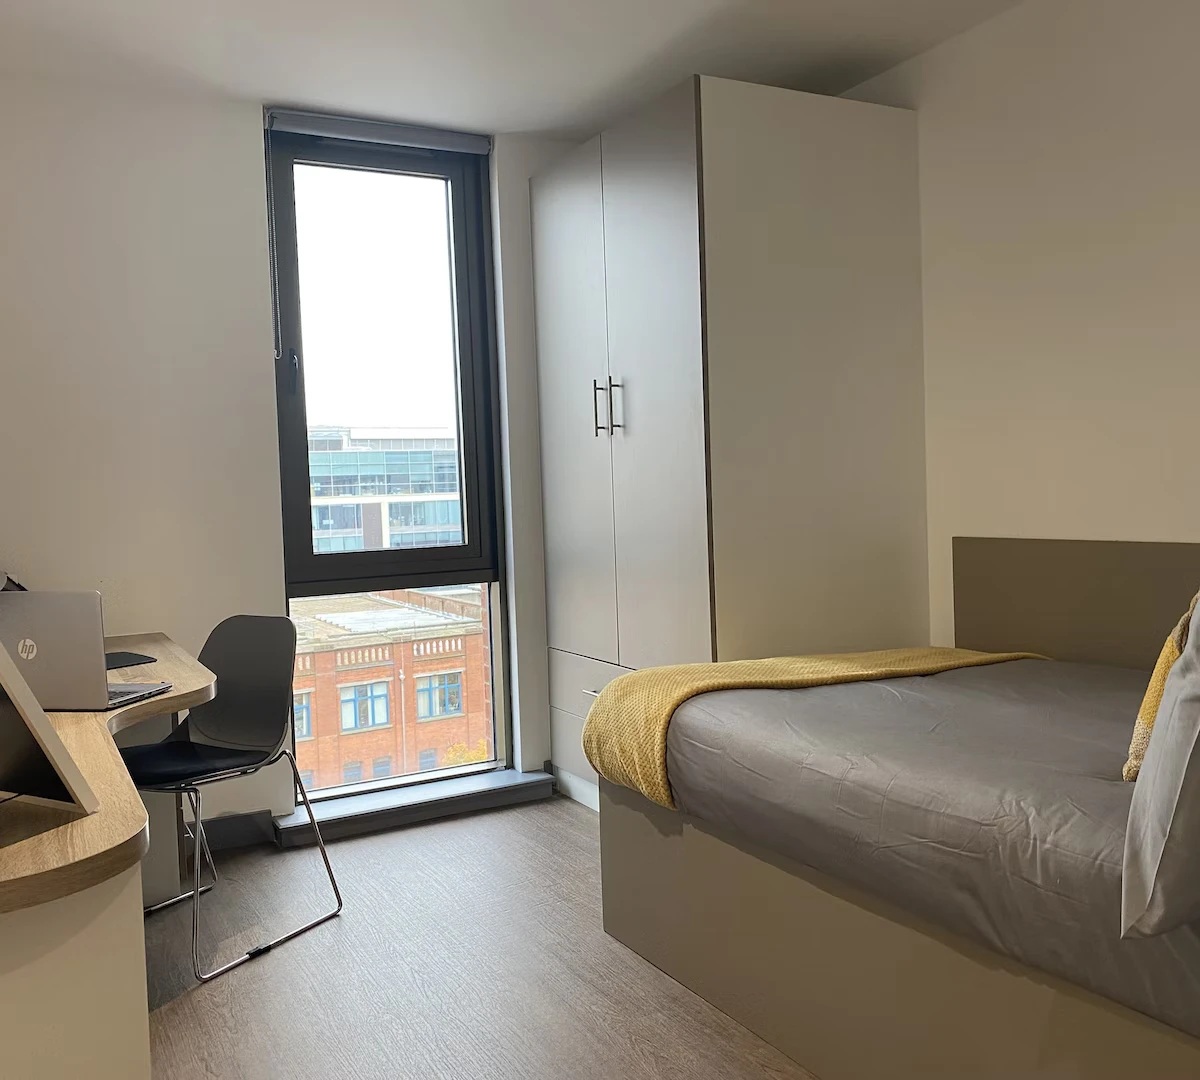 Cheap private room in Belfast